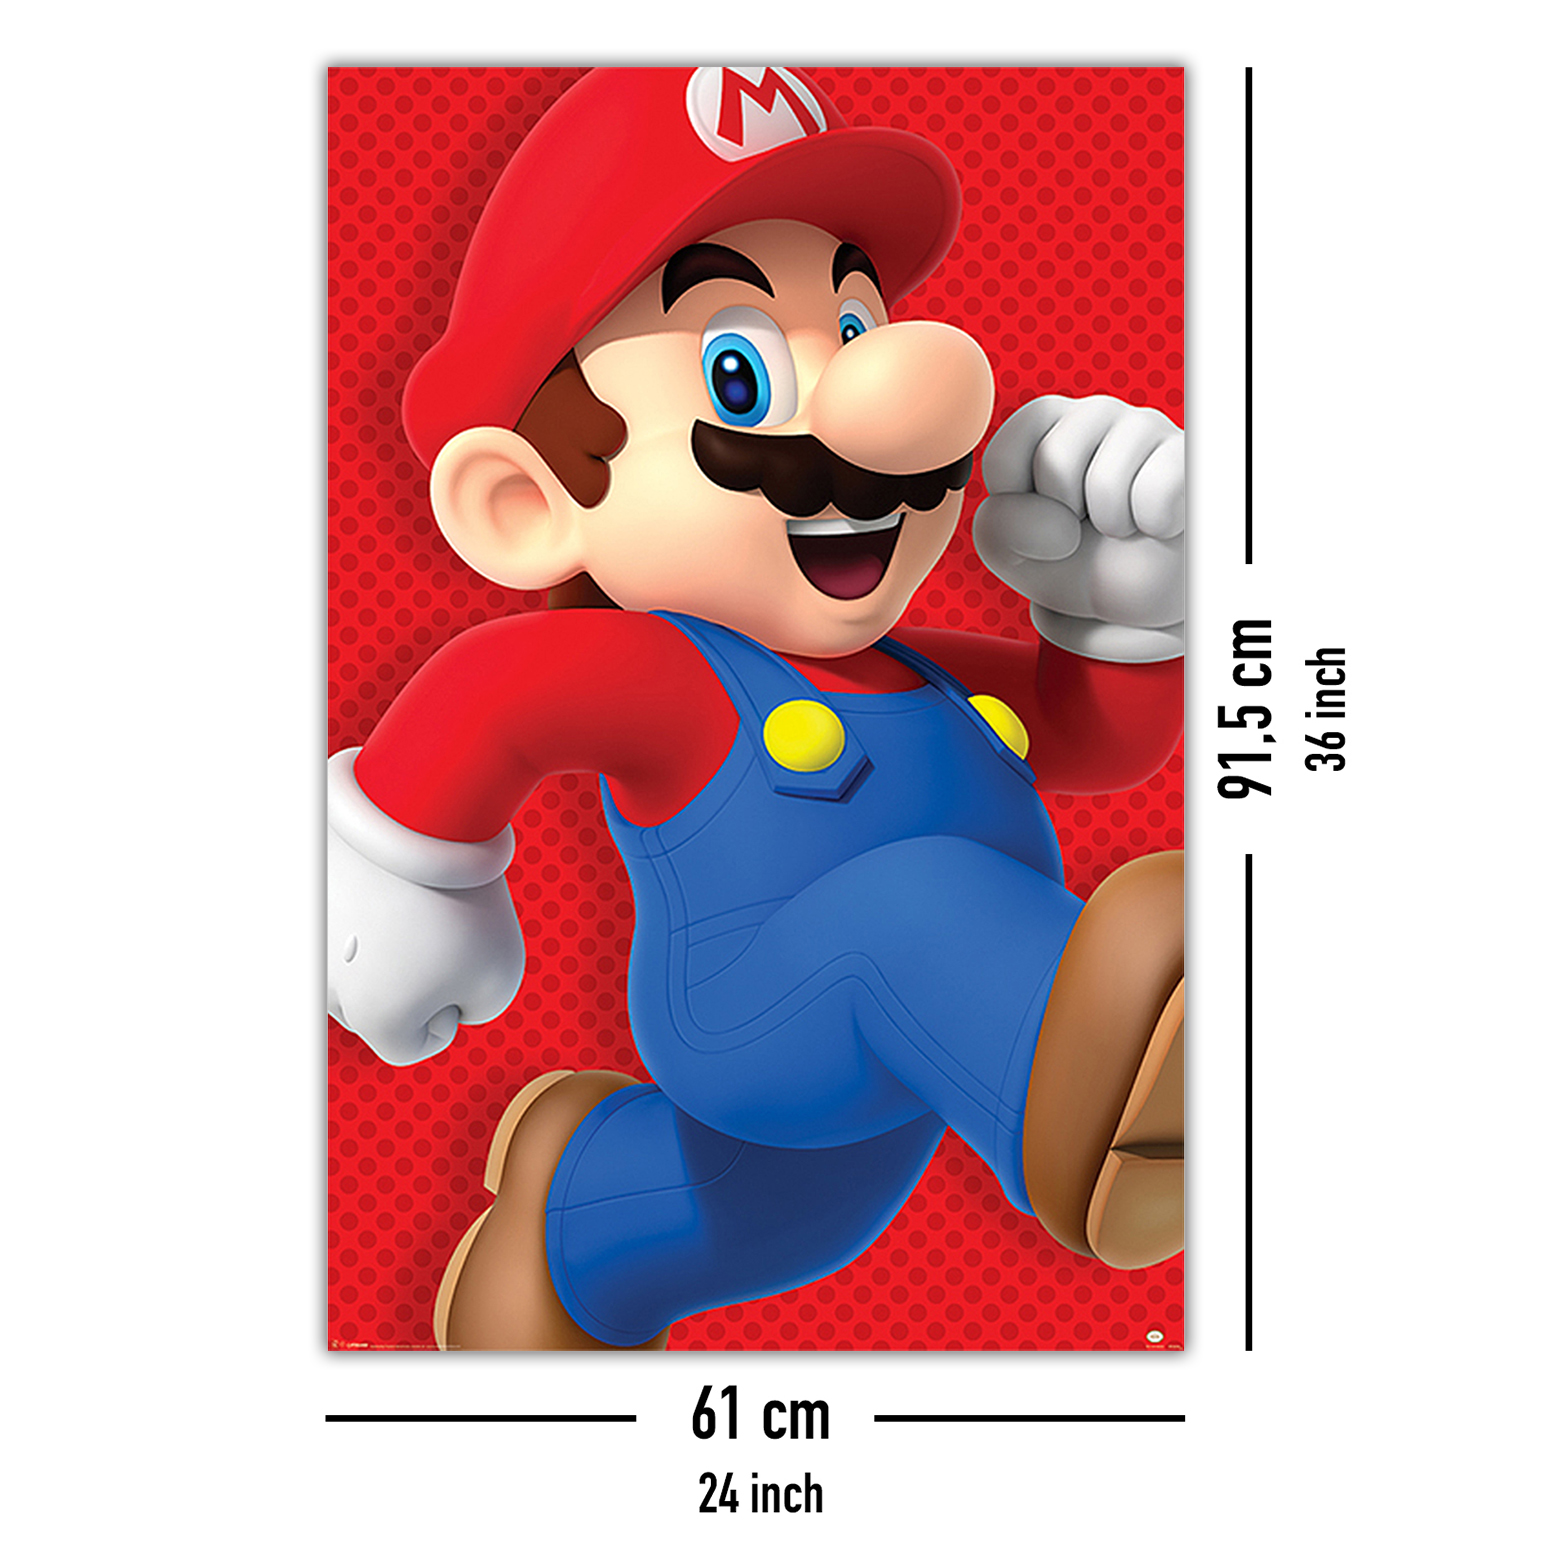 #126350 Super Mario Super Mario Poster Kalender 2020 30x30cm 